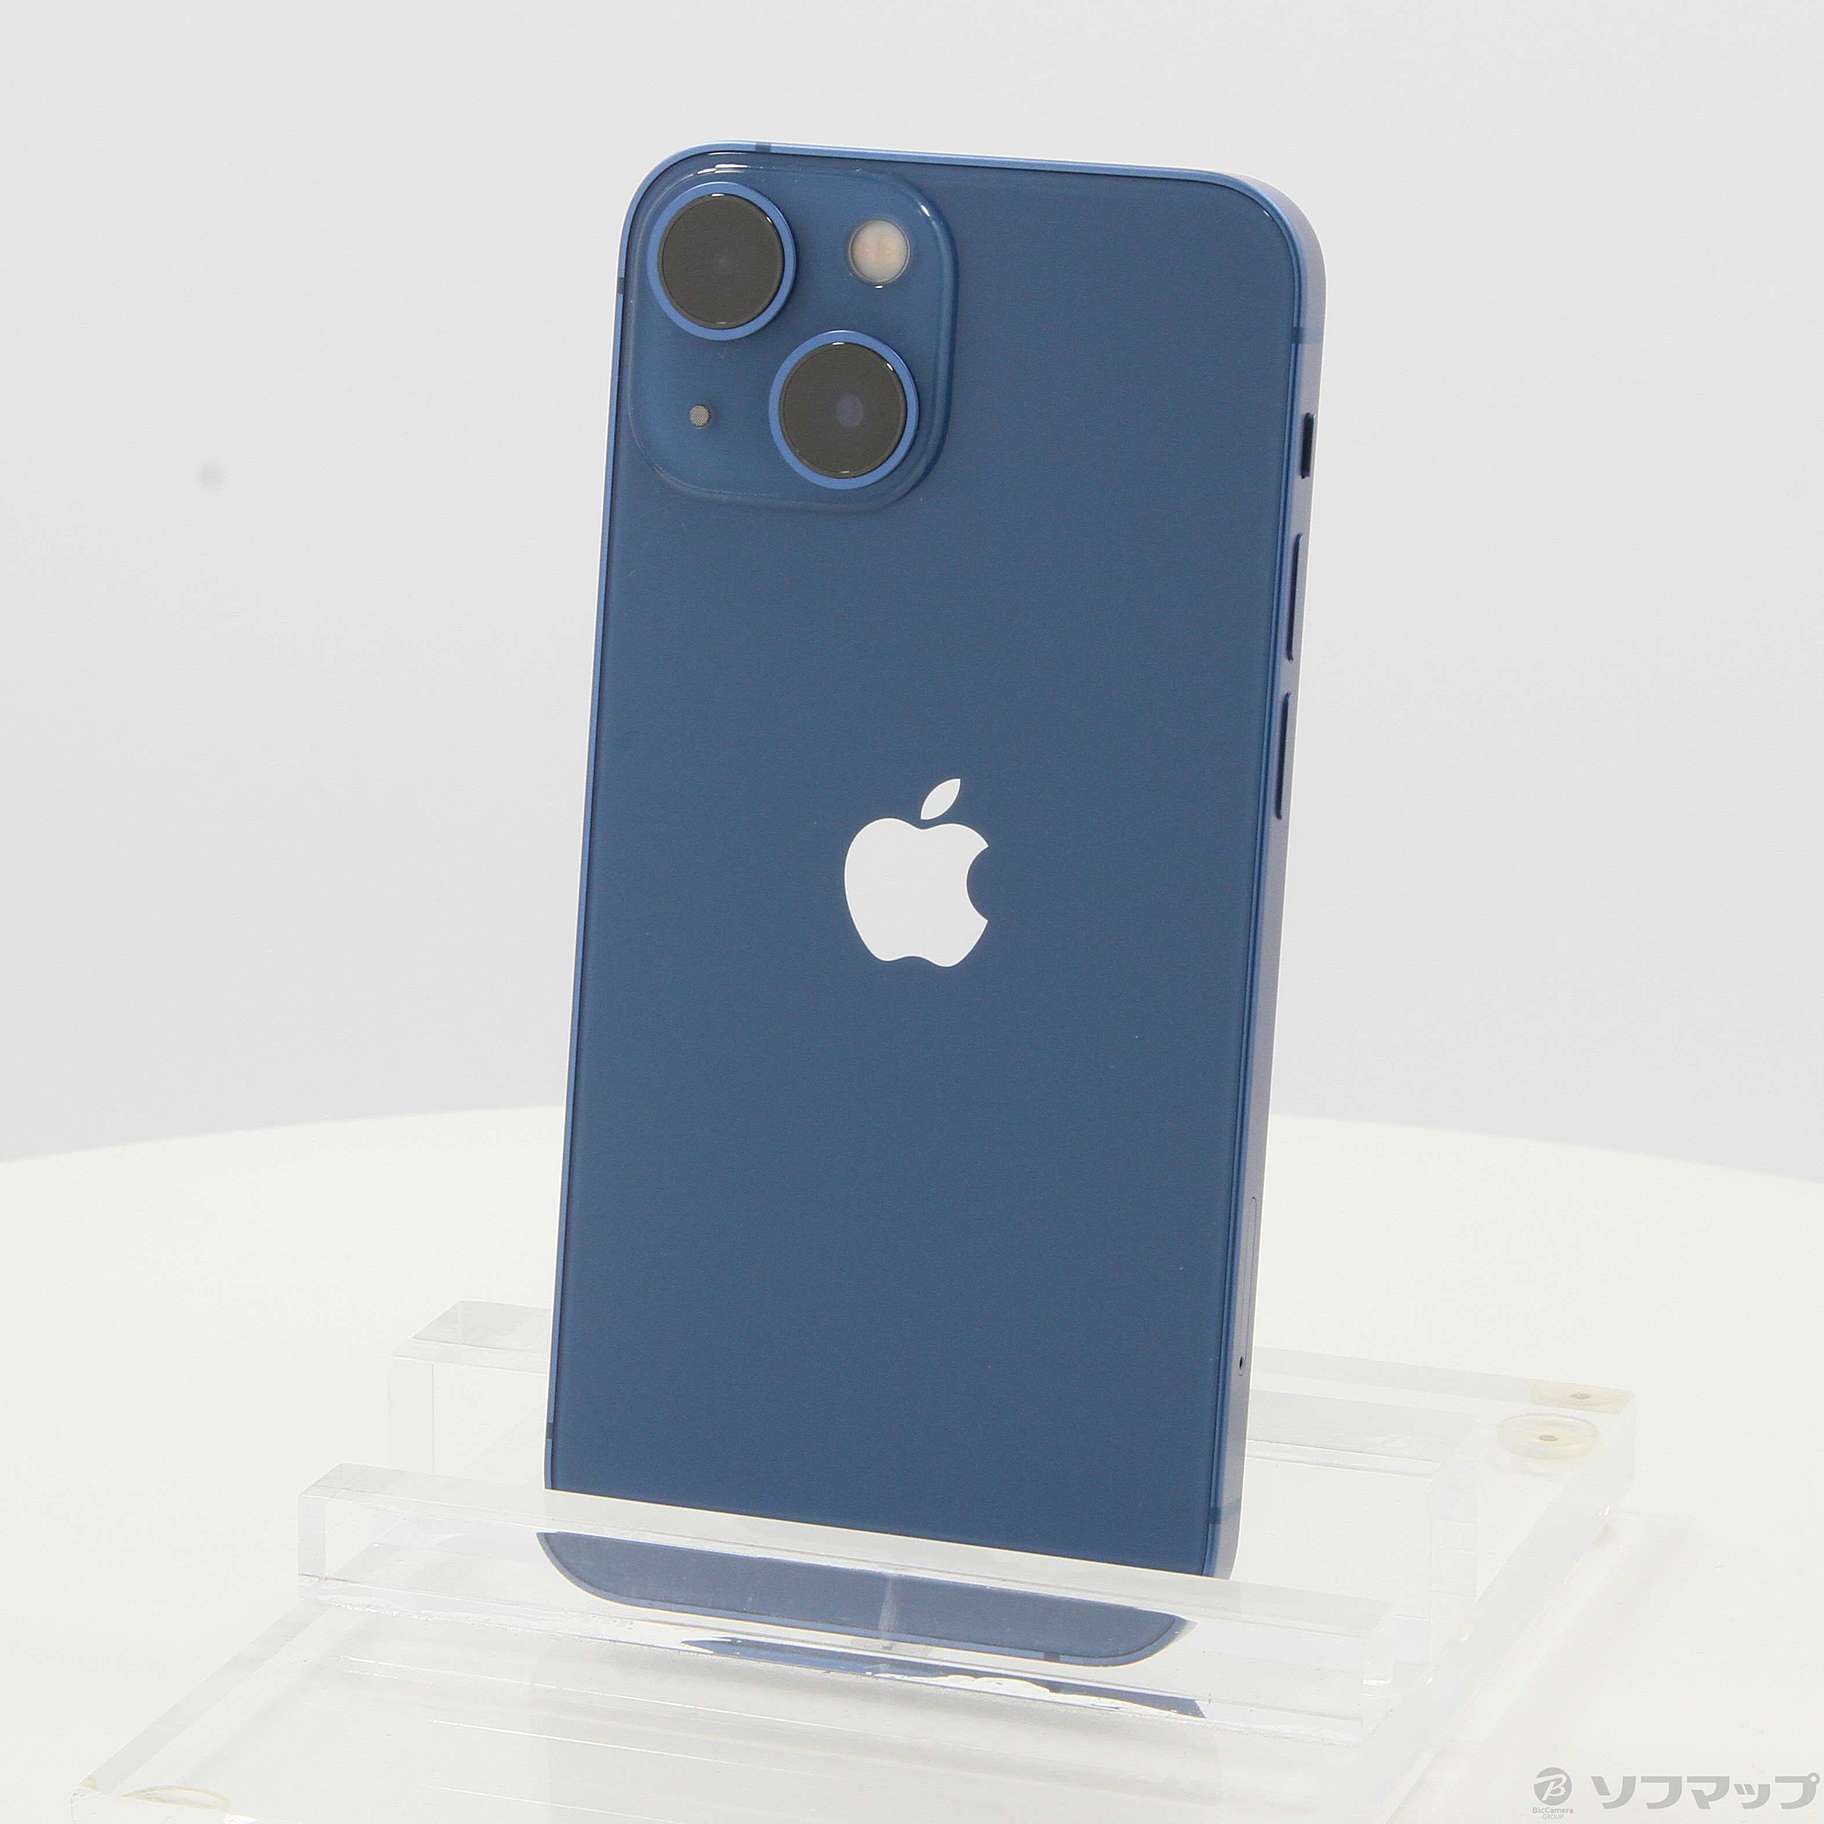 iPhone 13 mini 128GB SIMフリー [ブルー] 中古(白ロム)価格比較 